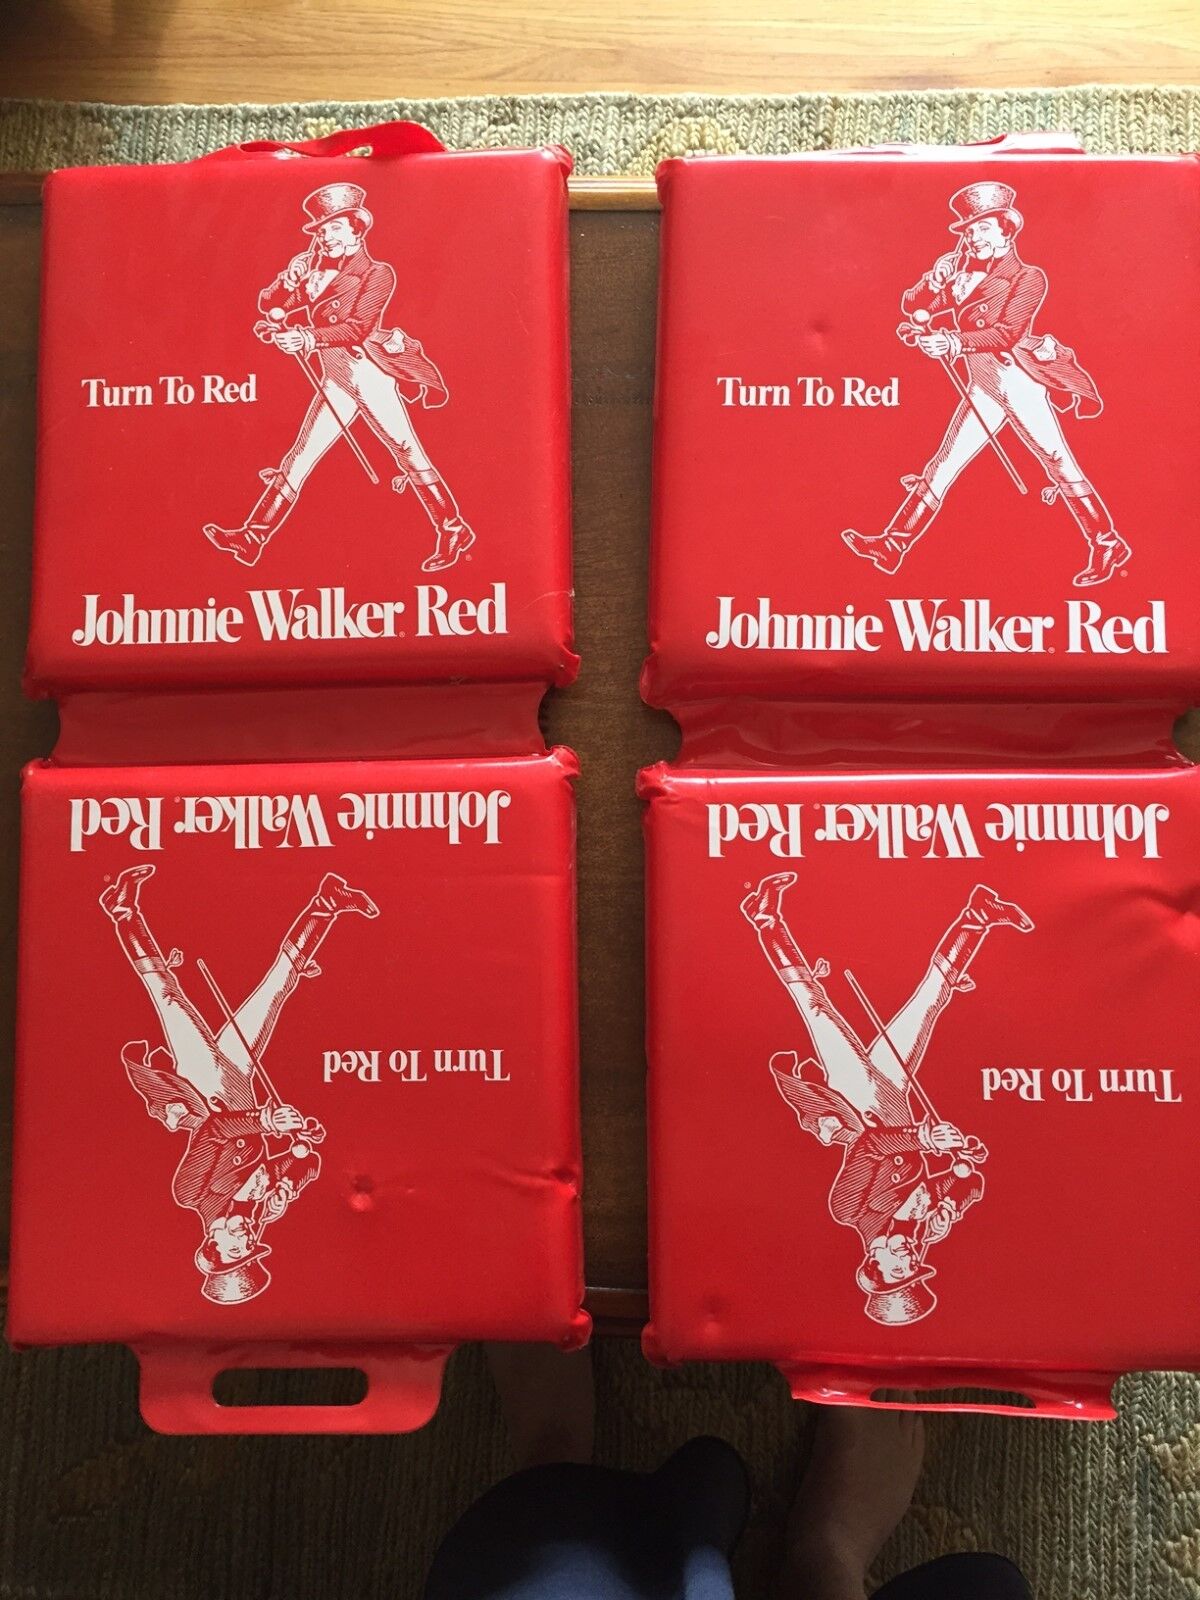 Johnnie Walker Red Stadium Seat Cushions Set of 2 for $19.00 Johnnie Walker